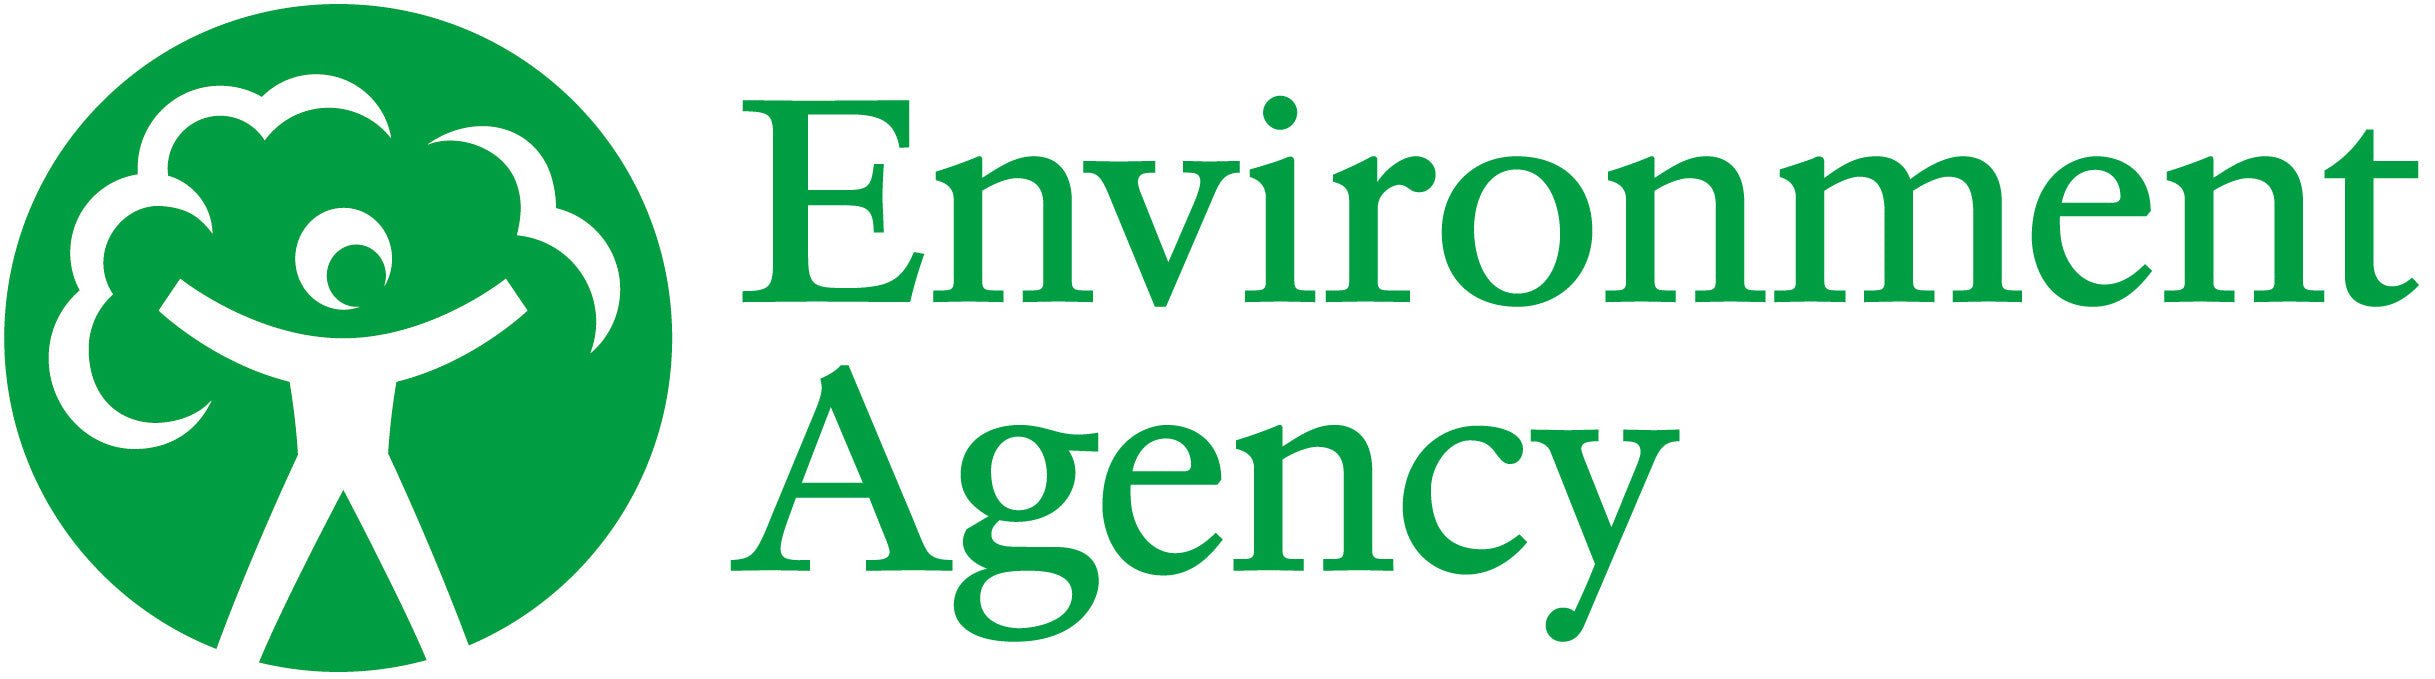 environment-agency-logotype